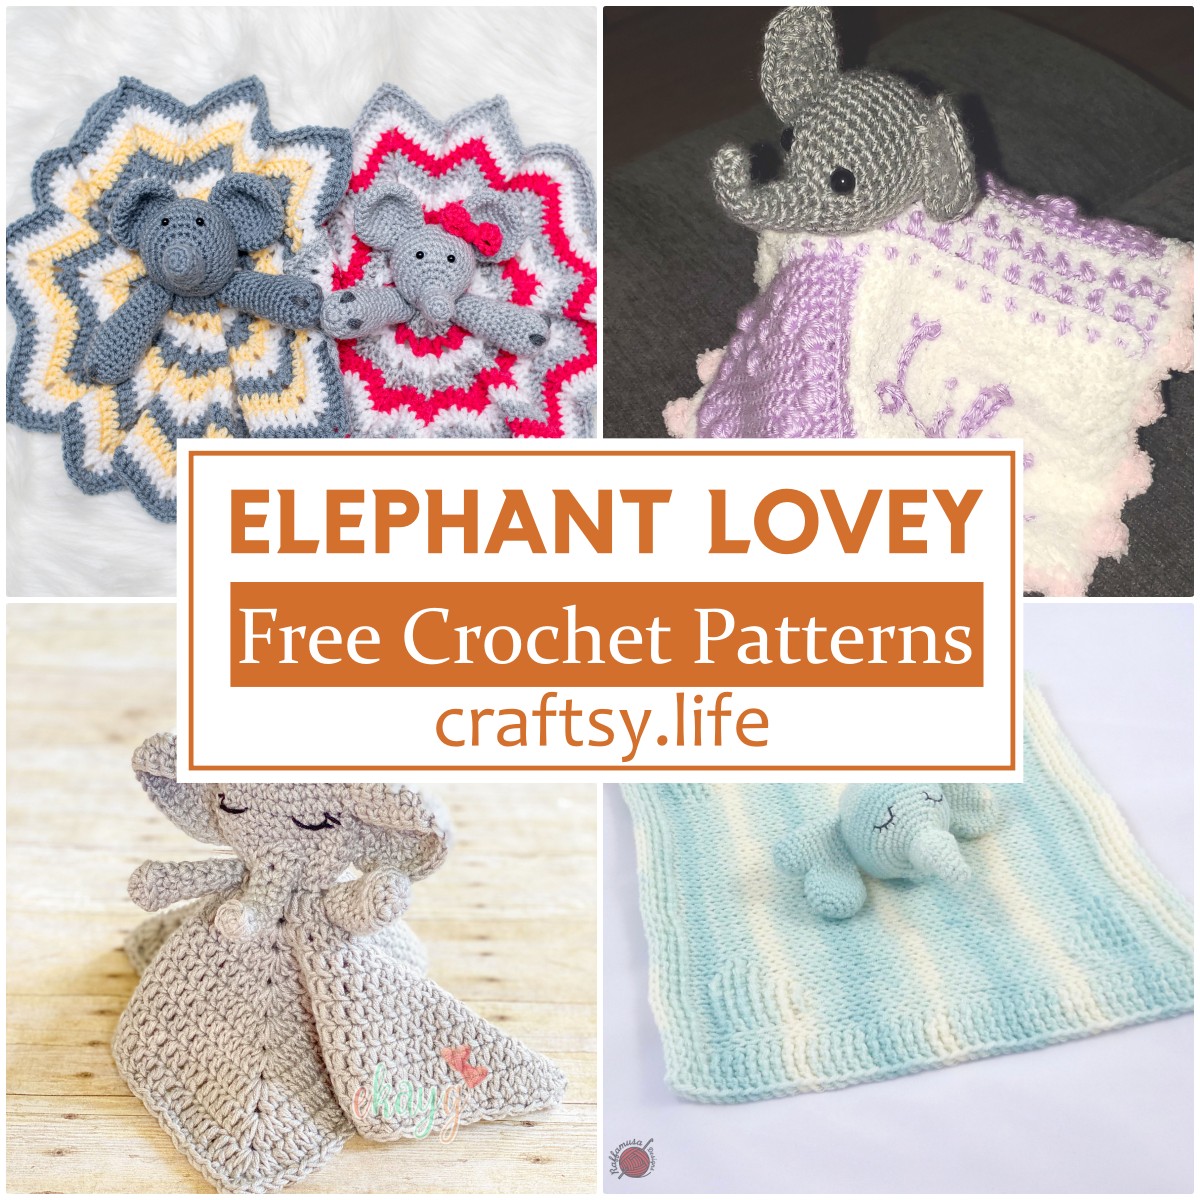 Free Crochet Elephant Lovey Patterns